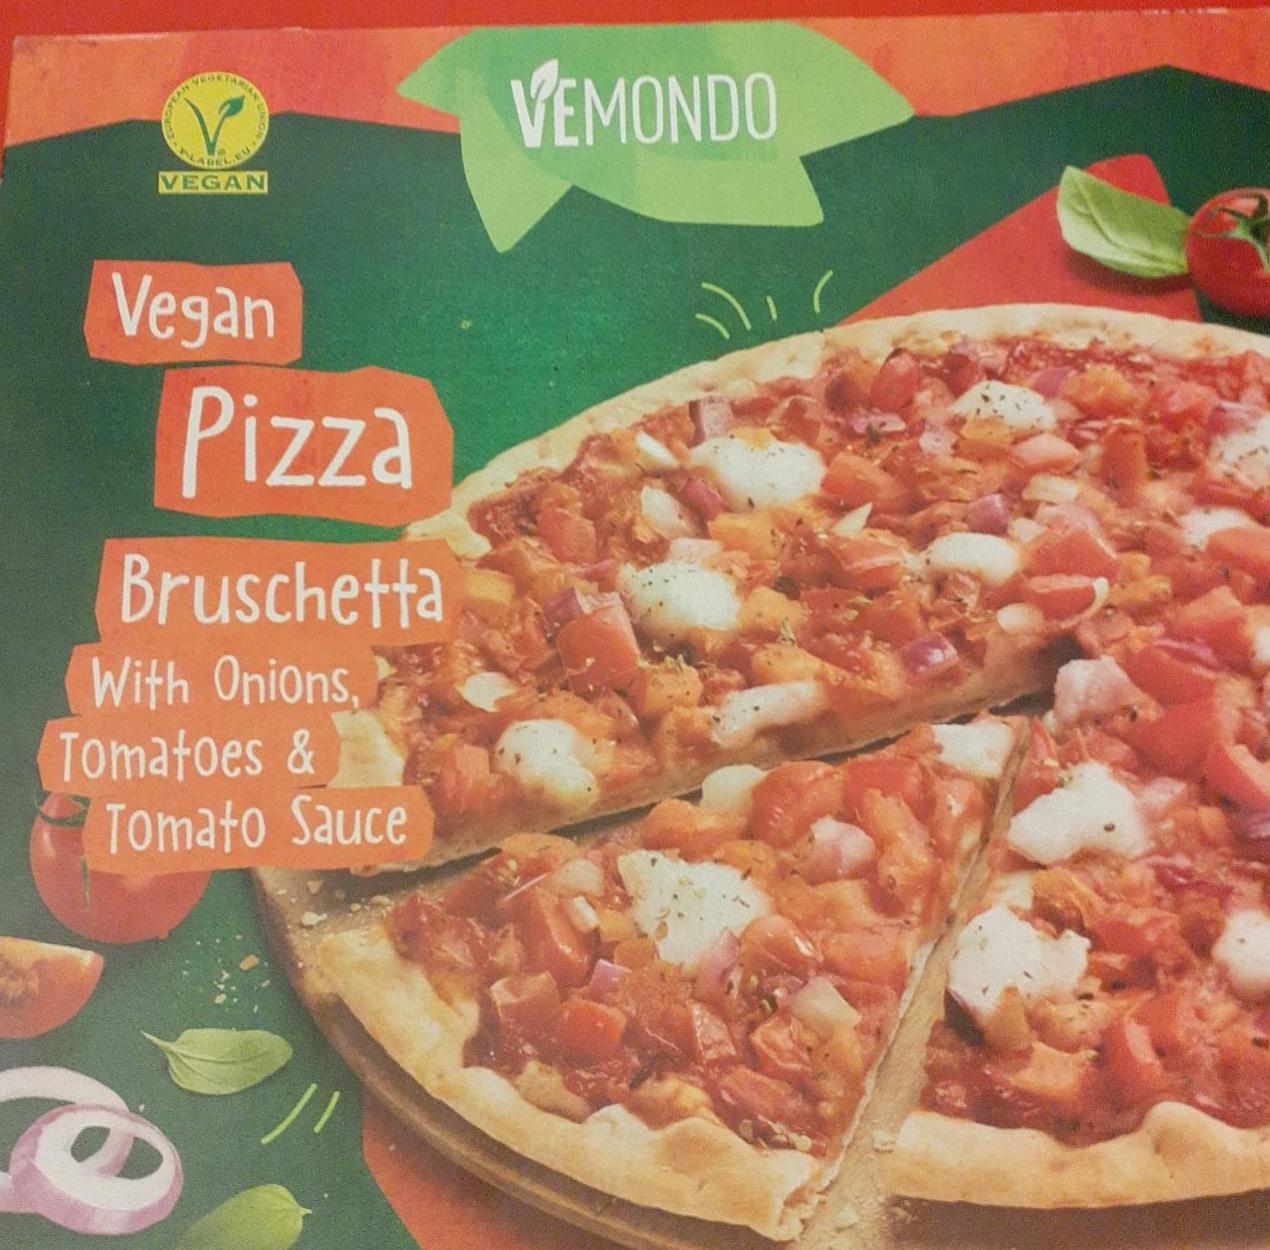 Képek - Vegan pizza Vemondo